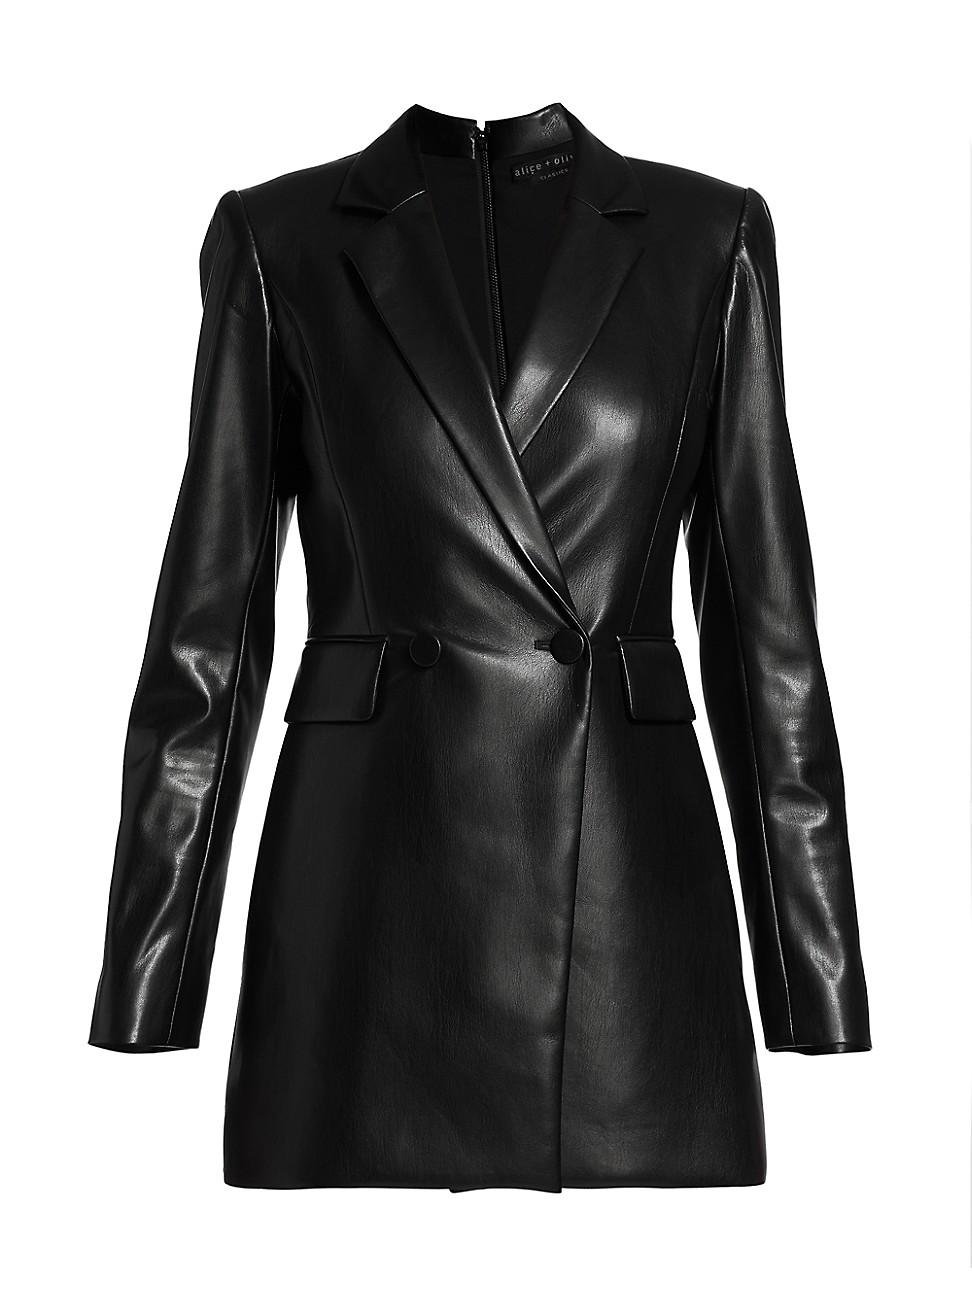 Alice + Olivia Kyrie Faux Leather Blazer Dress in Black | Lyst